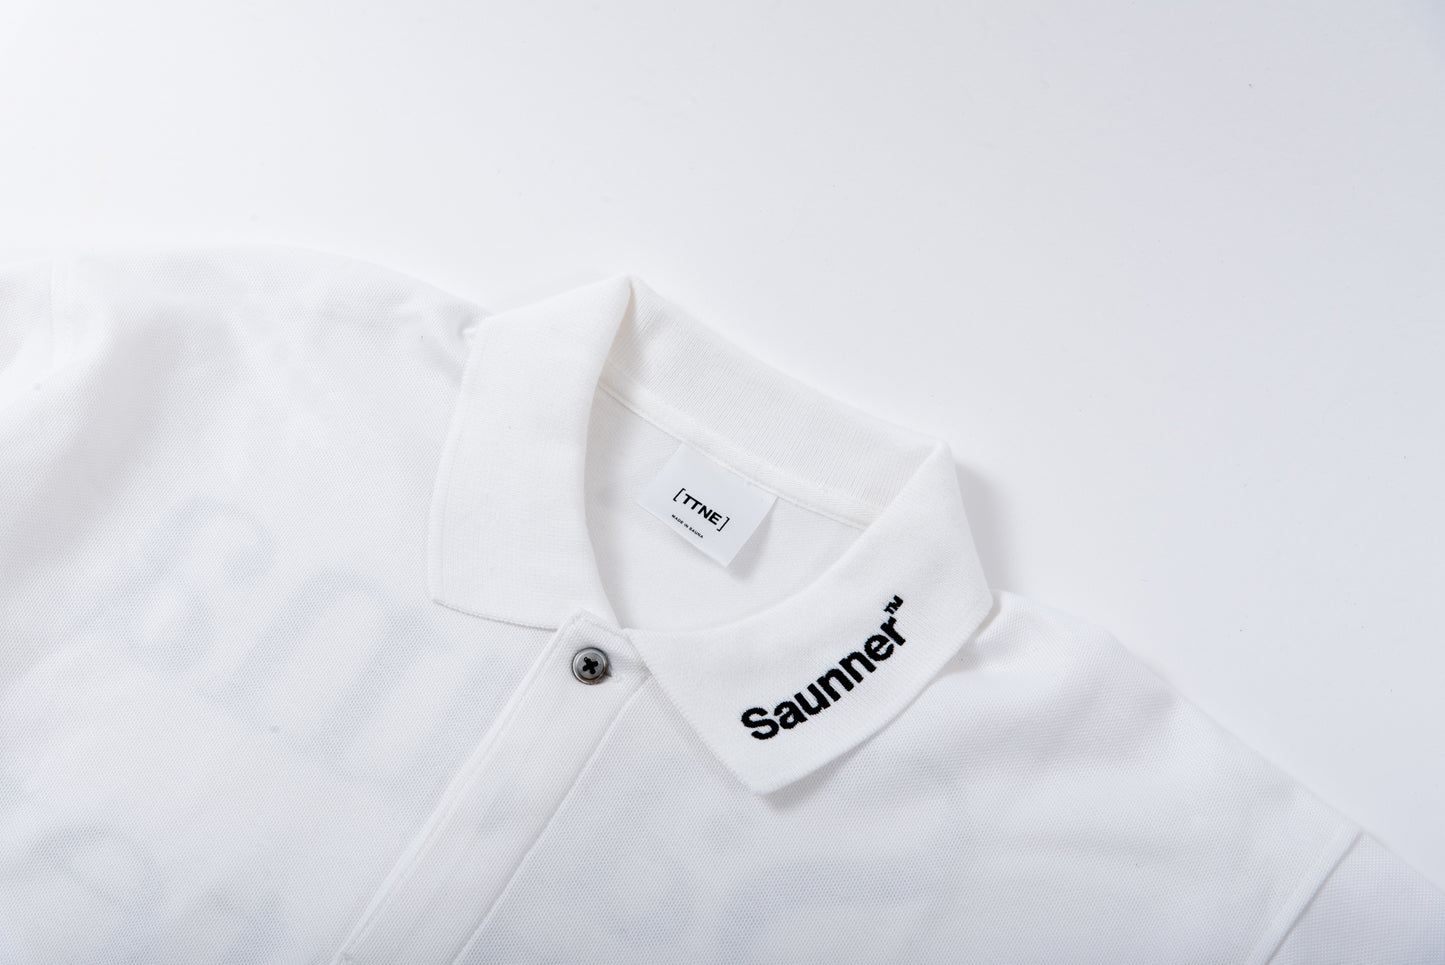 “Sauna Water Golf Repeat” Long Sleeve Polo Shirts - White